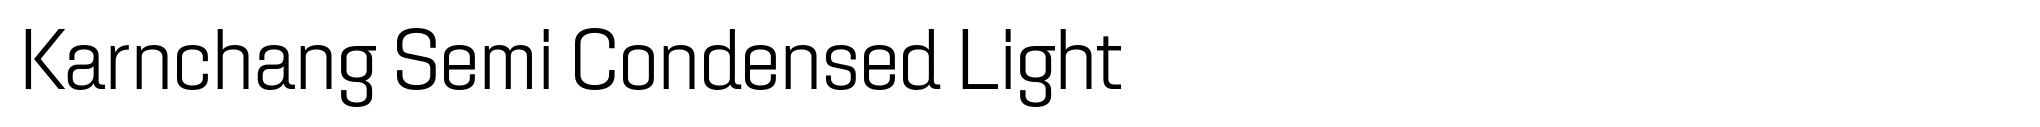 Karnchang Semi Condensed Light image